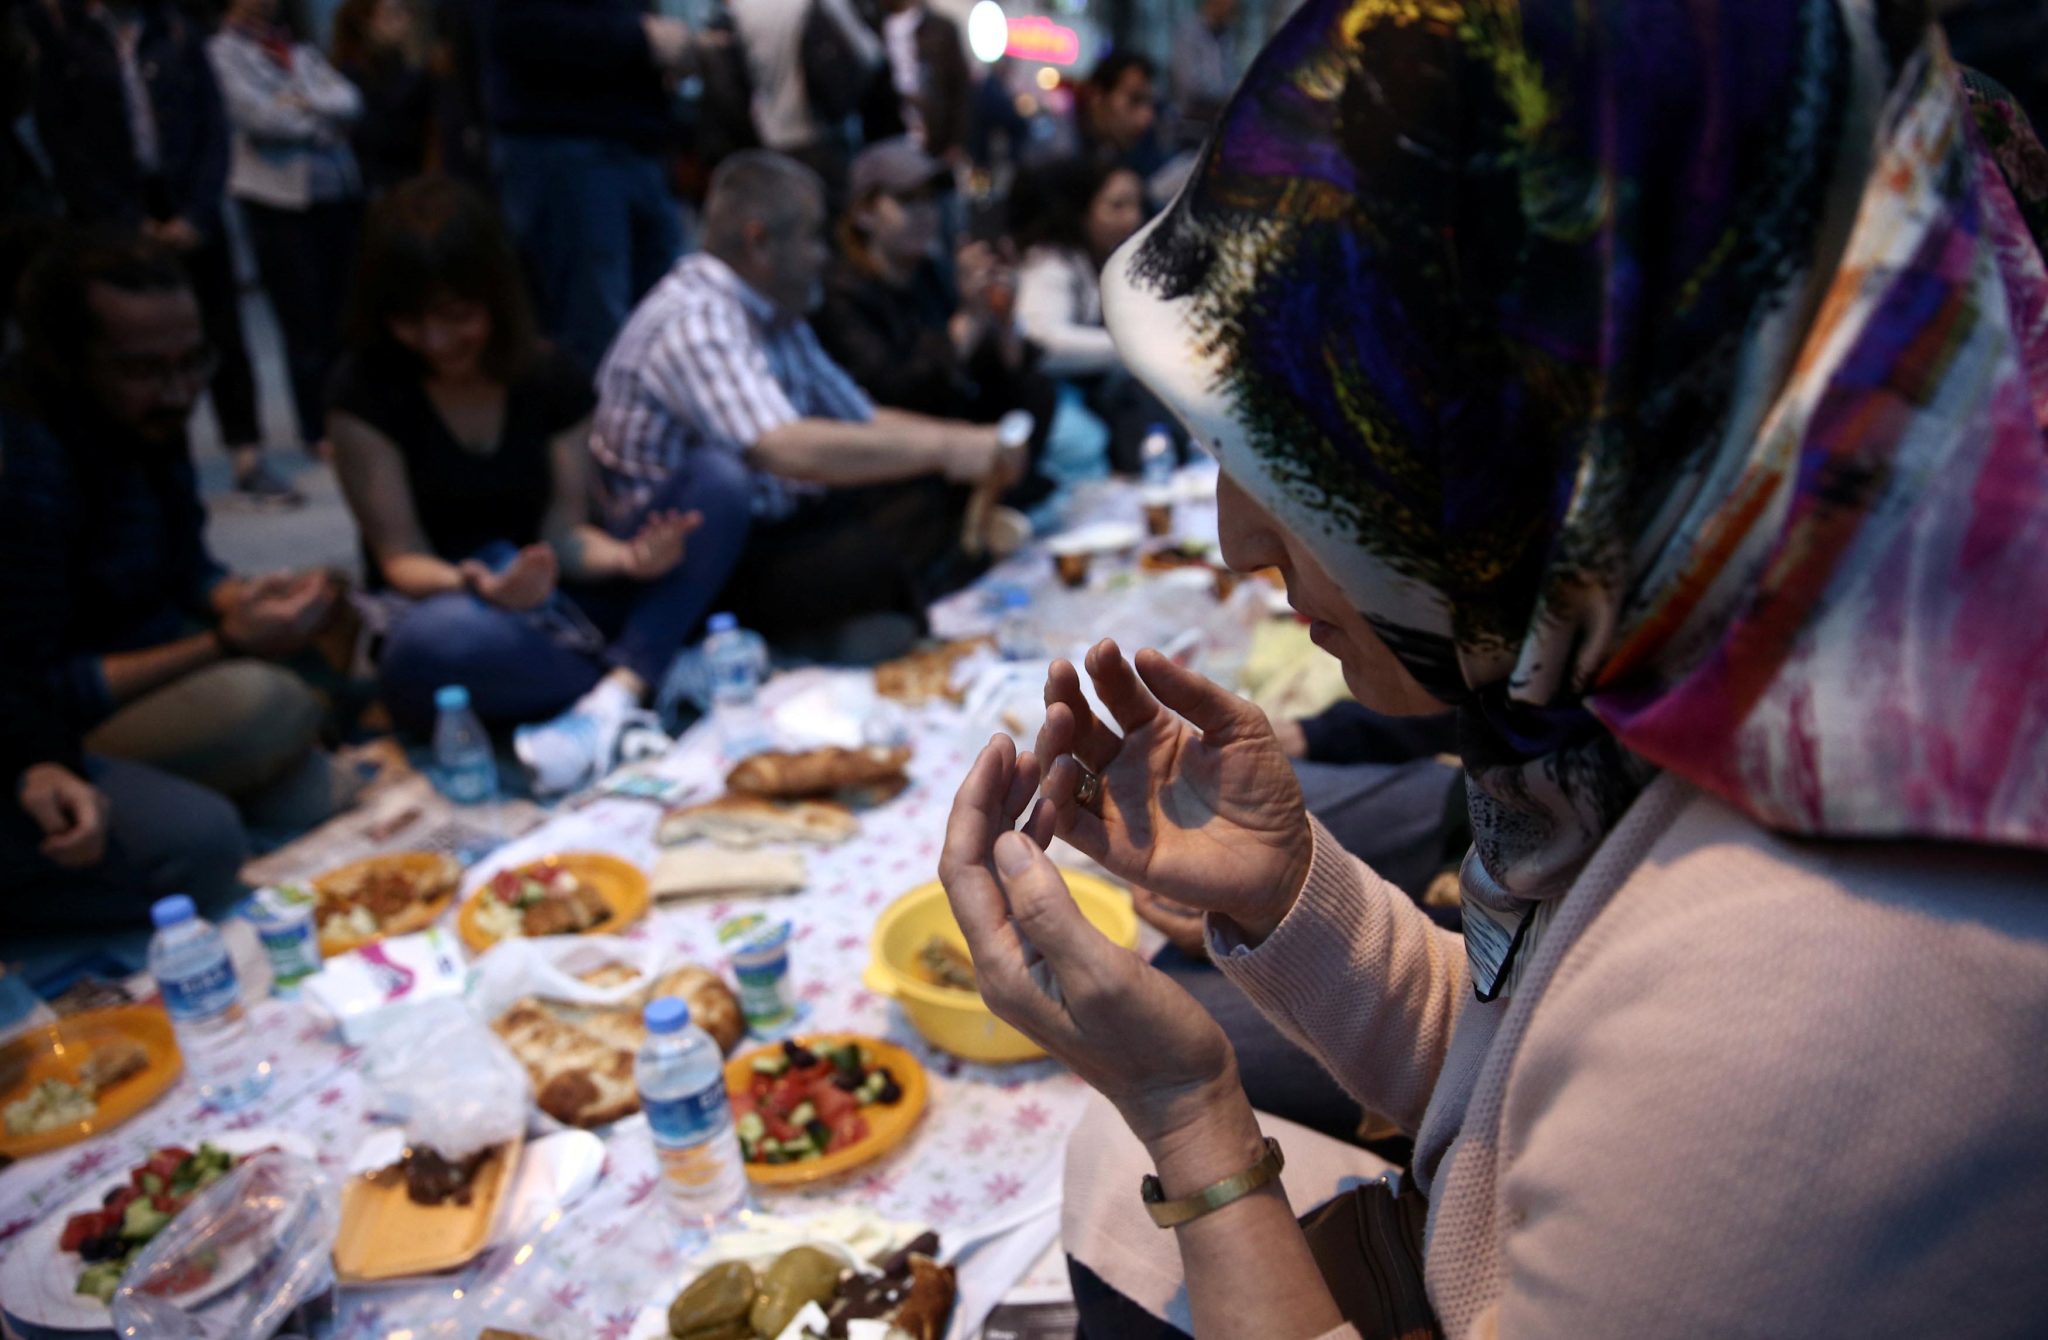 У мусульман пост рамадан длится. Ифтар Марокко. Разговение Рамадан байрам. Мусульманская еда. Традиции праздника Рамадан.